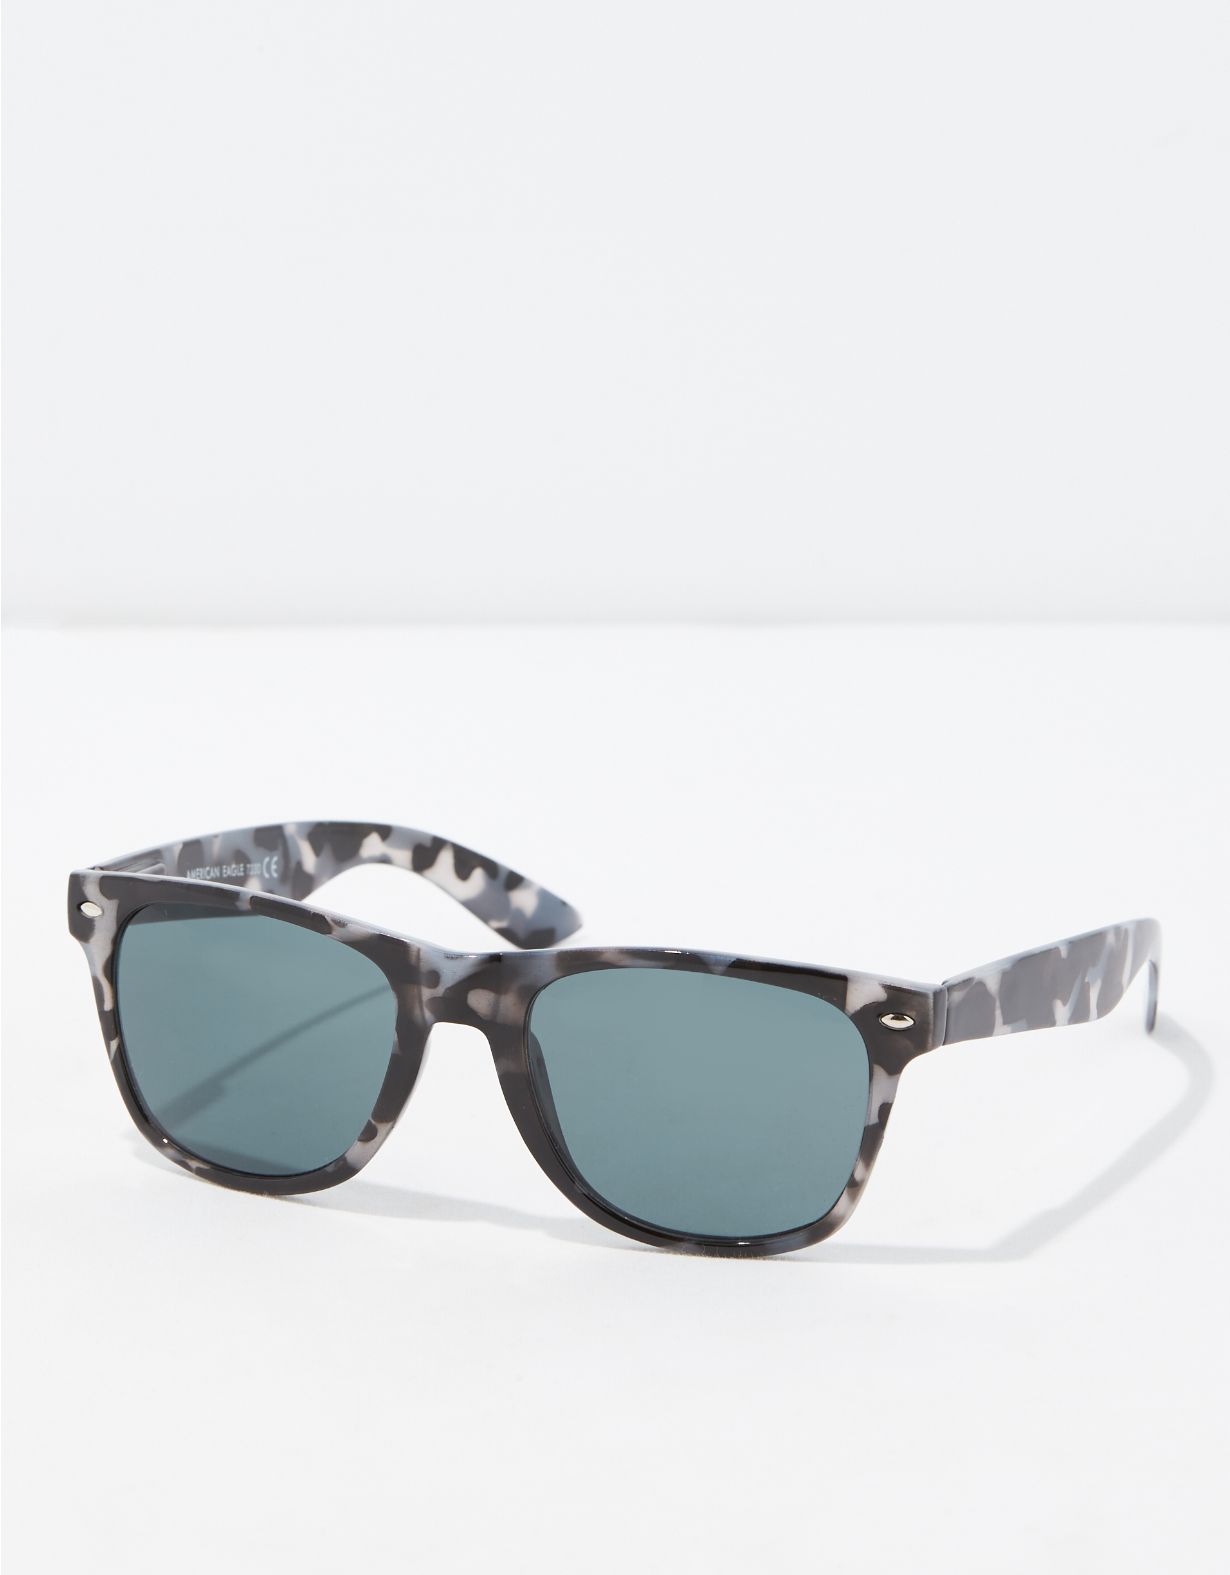 AEO Grey Tortoise Classic Sunglasses